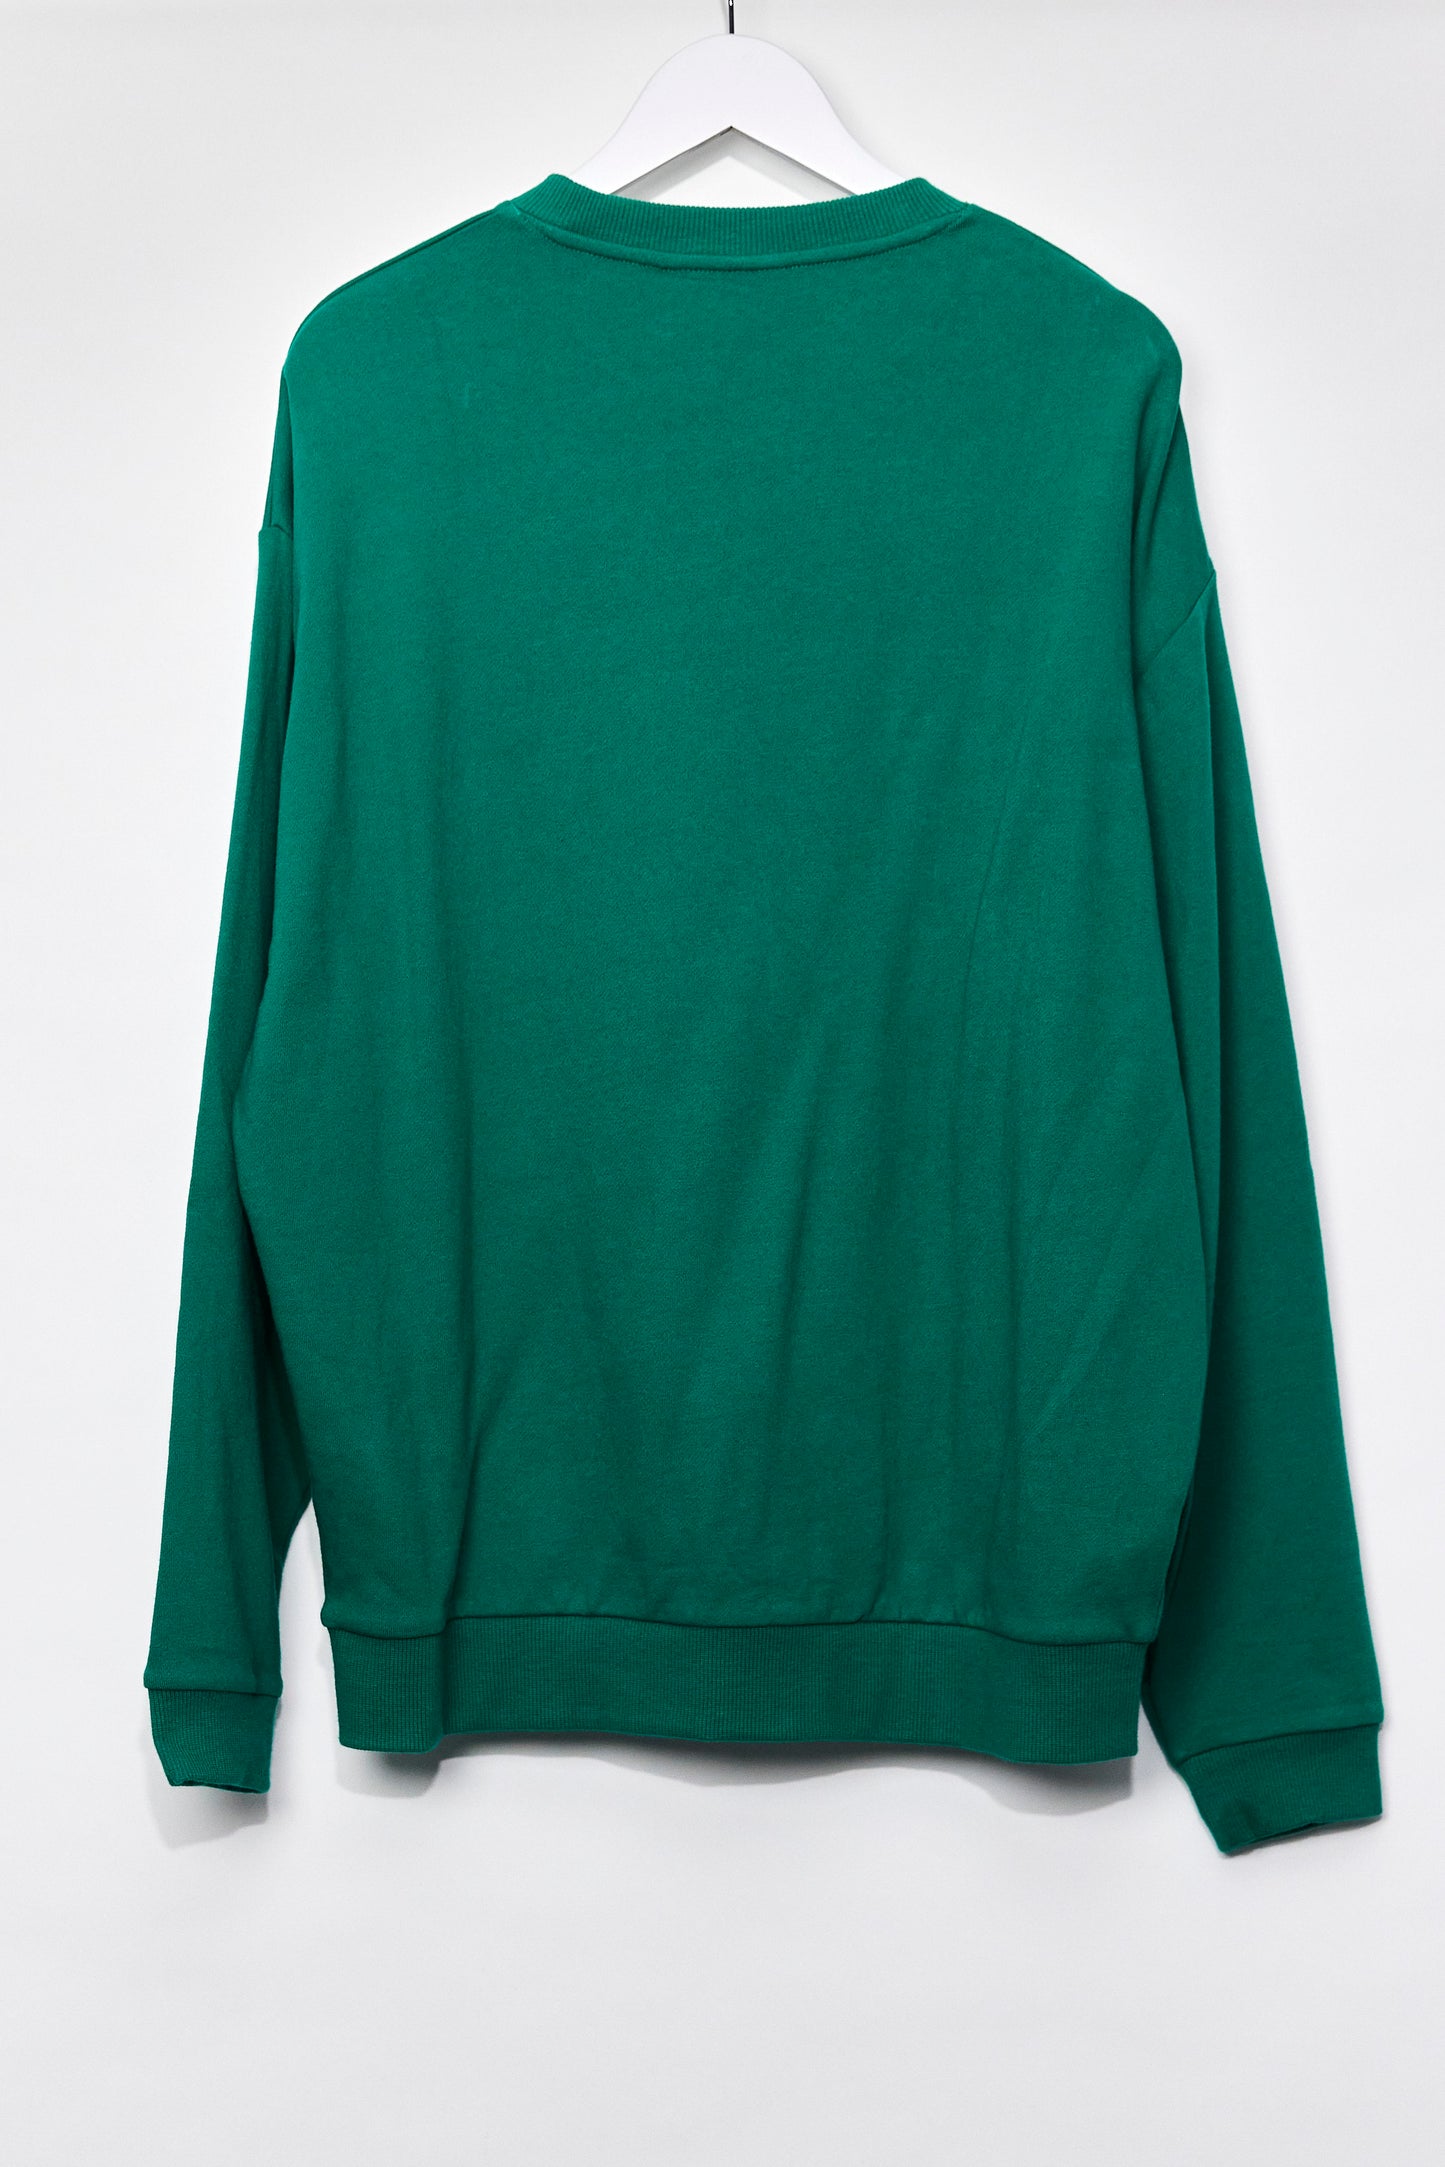 Mens ASOS Green Oversized Sweatshirt size Medium